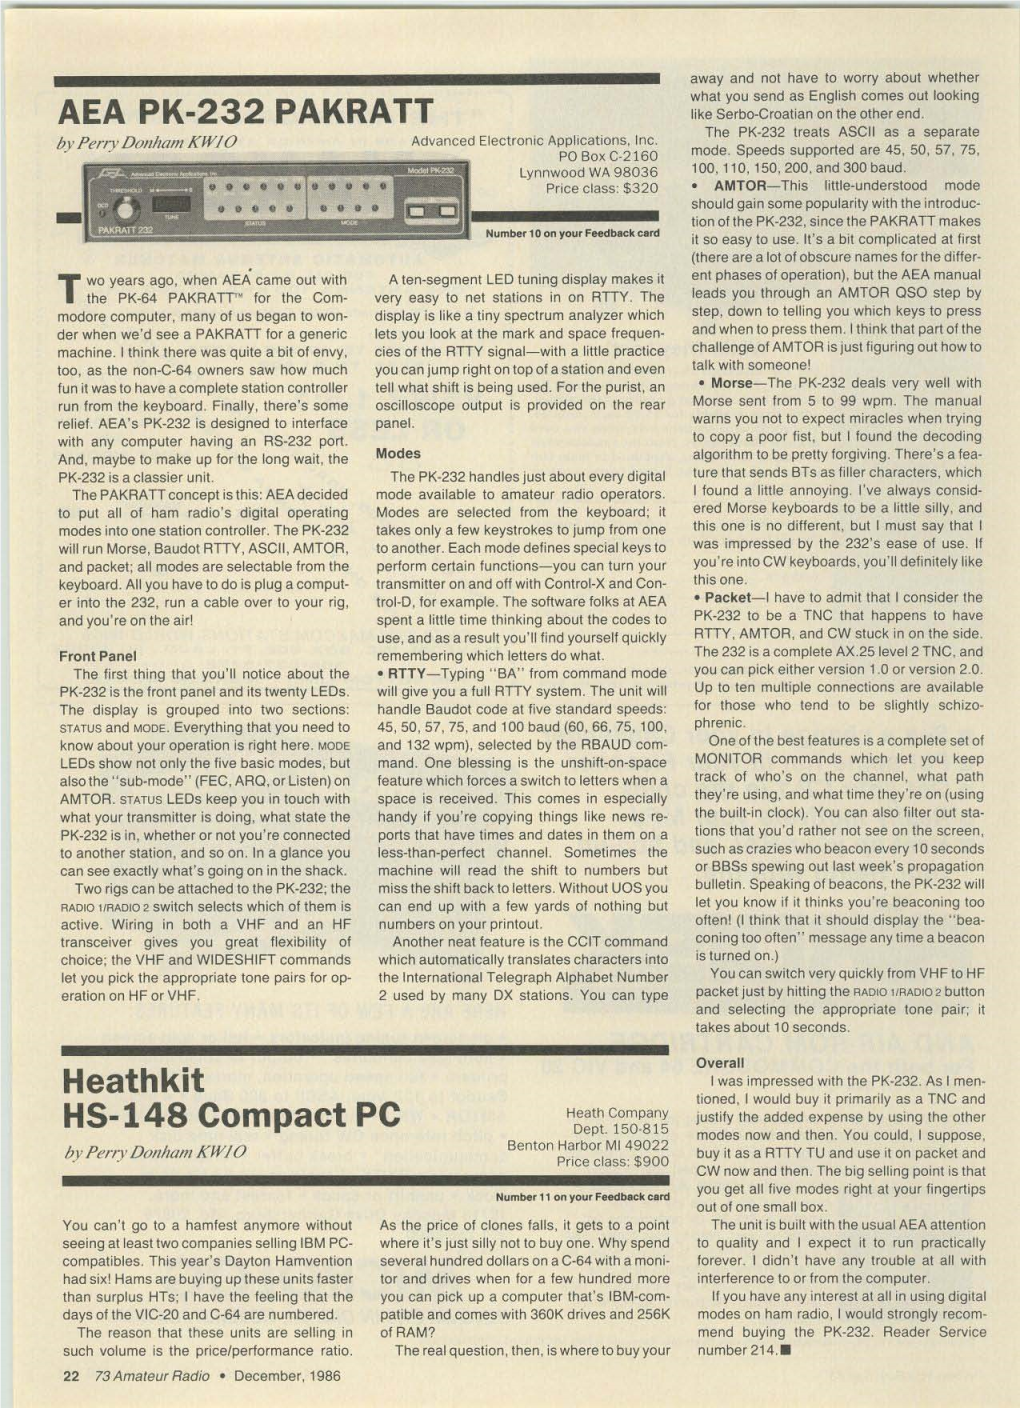 AEA PK-232 PAKRATT Heathkit HS-148 Compact PC